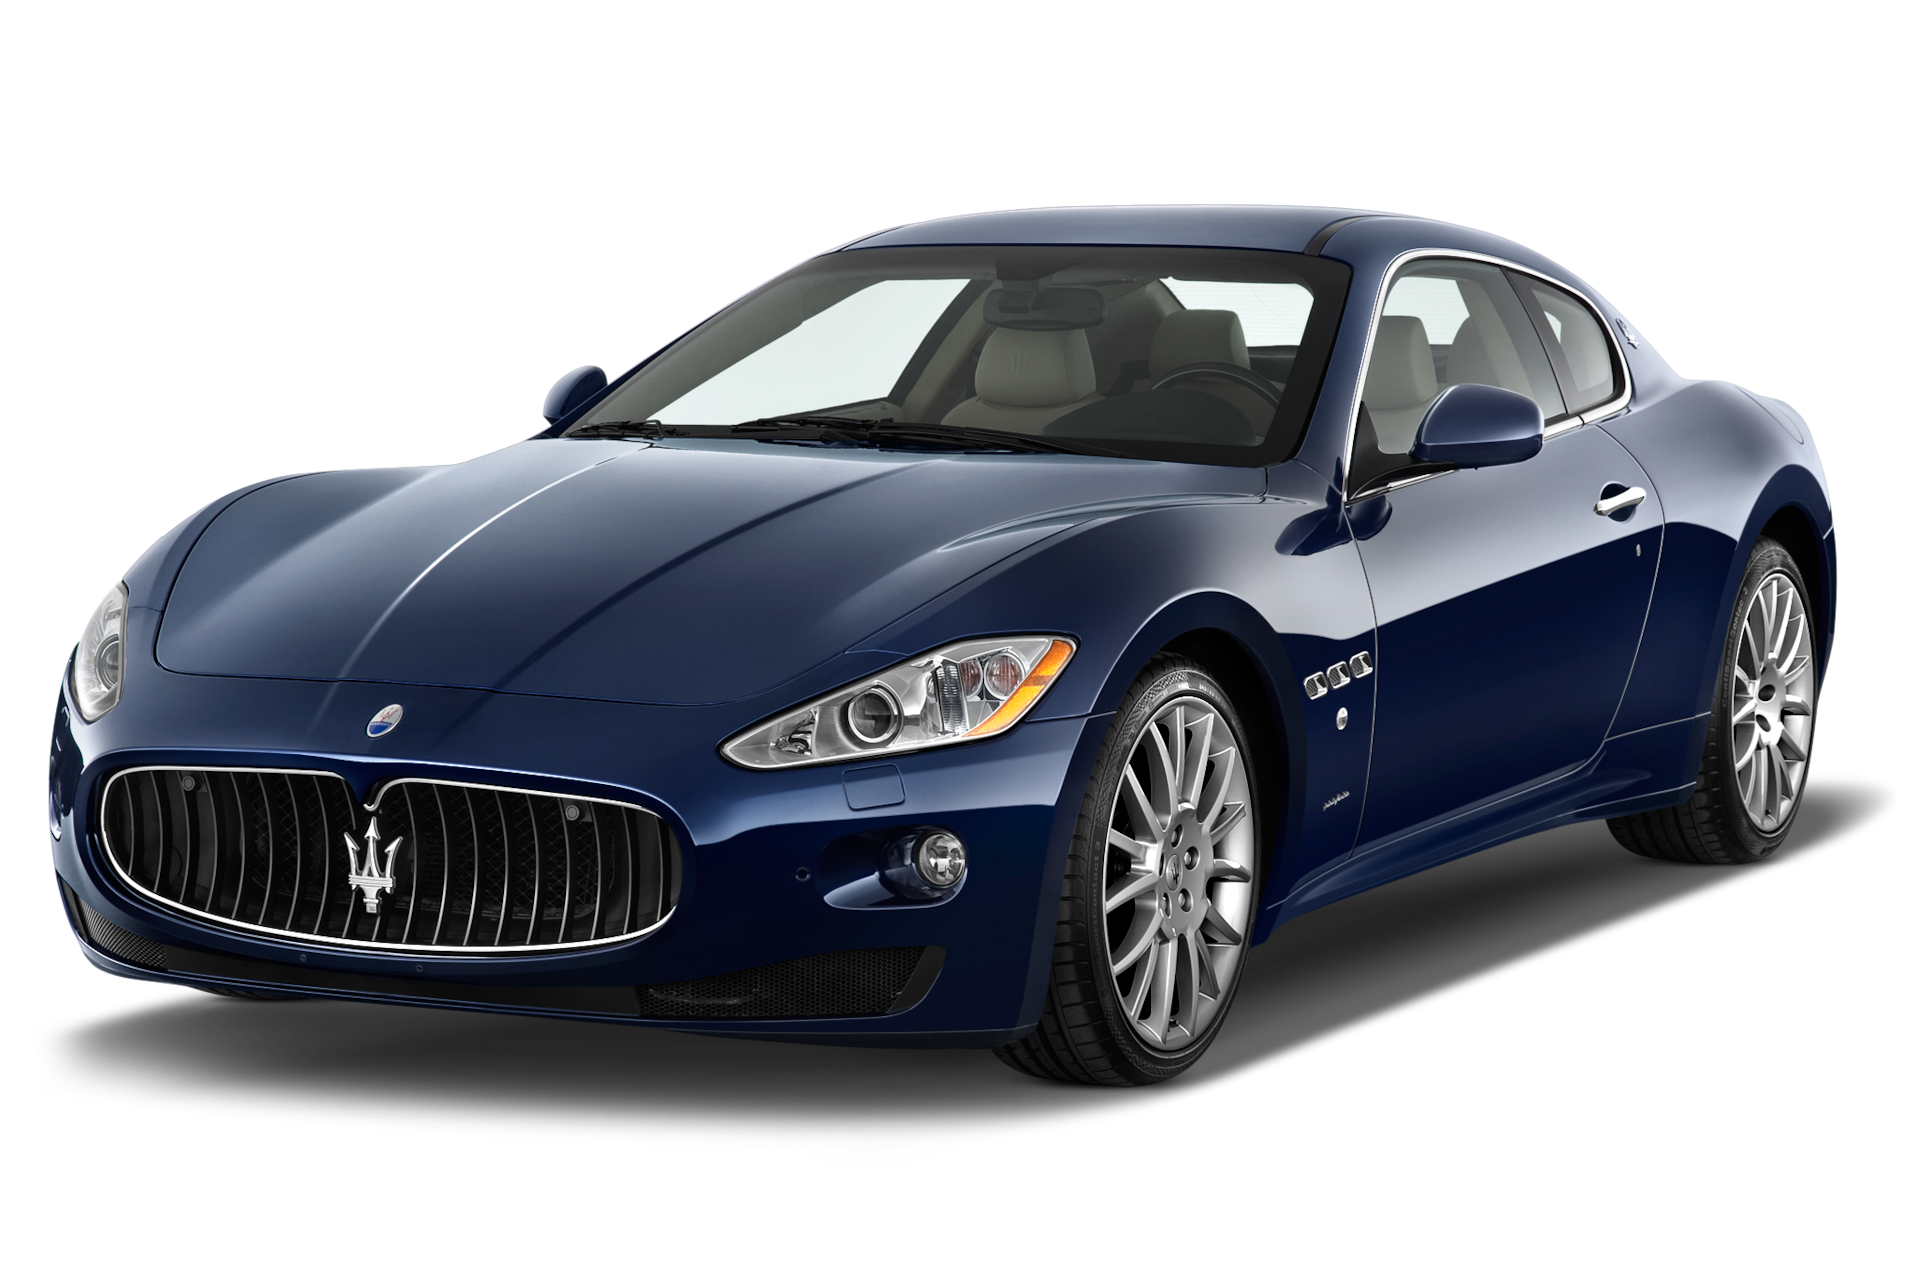 2011 Maserati GranTurismo Prices, Reviews, and Photos - MotorTrend